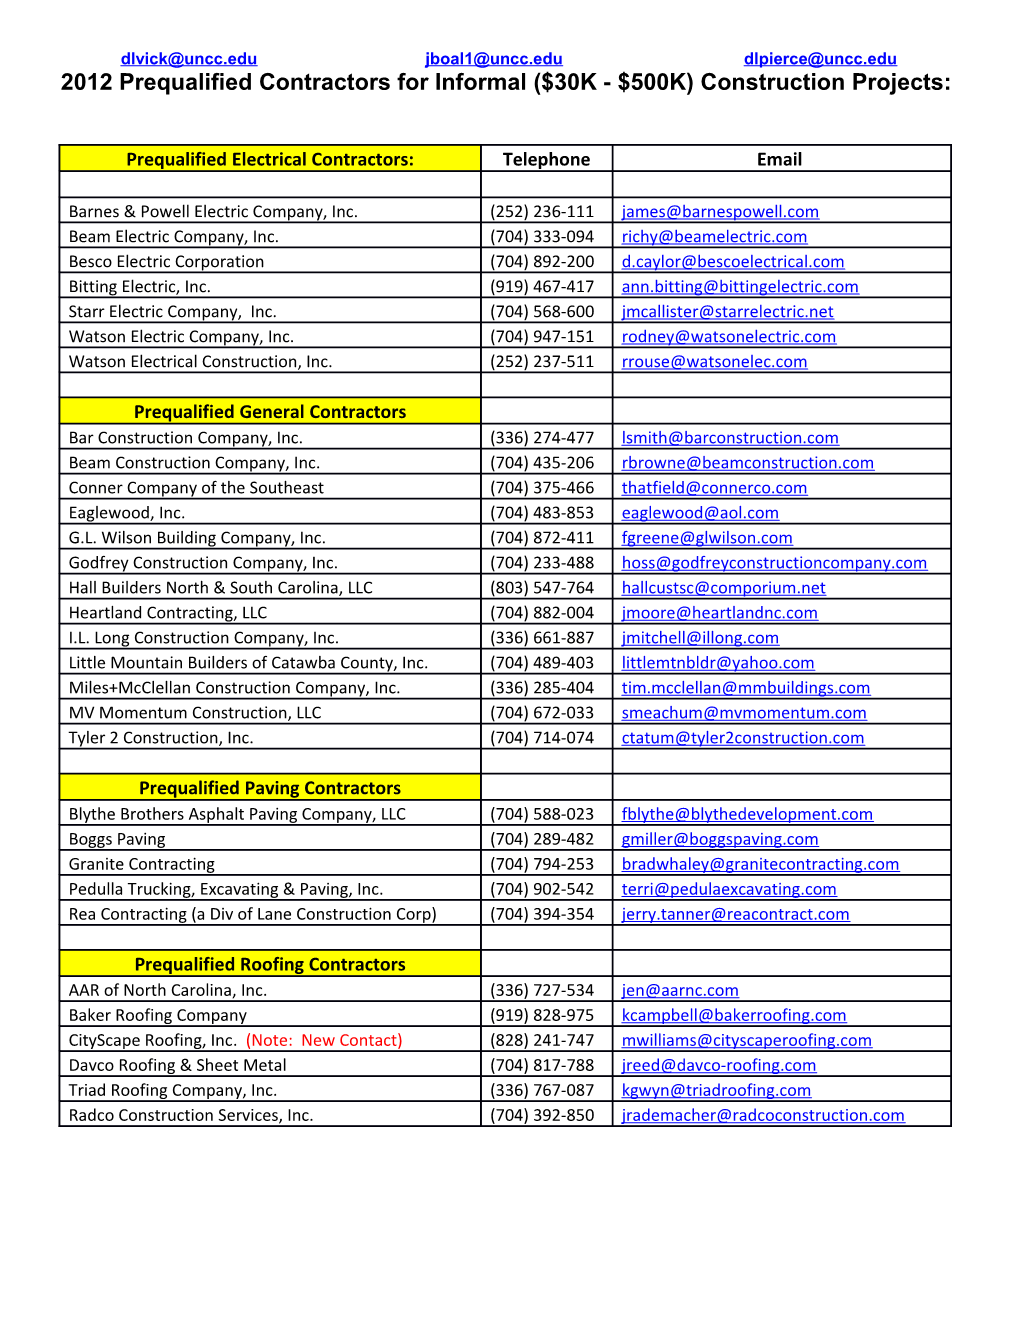 Vendor Information Guide (March 2012)